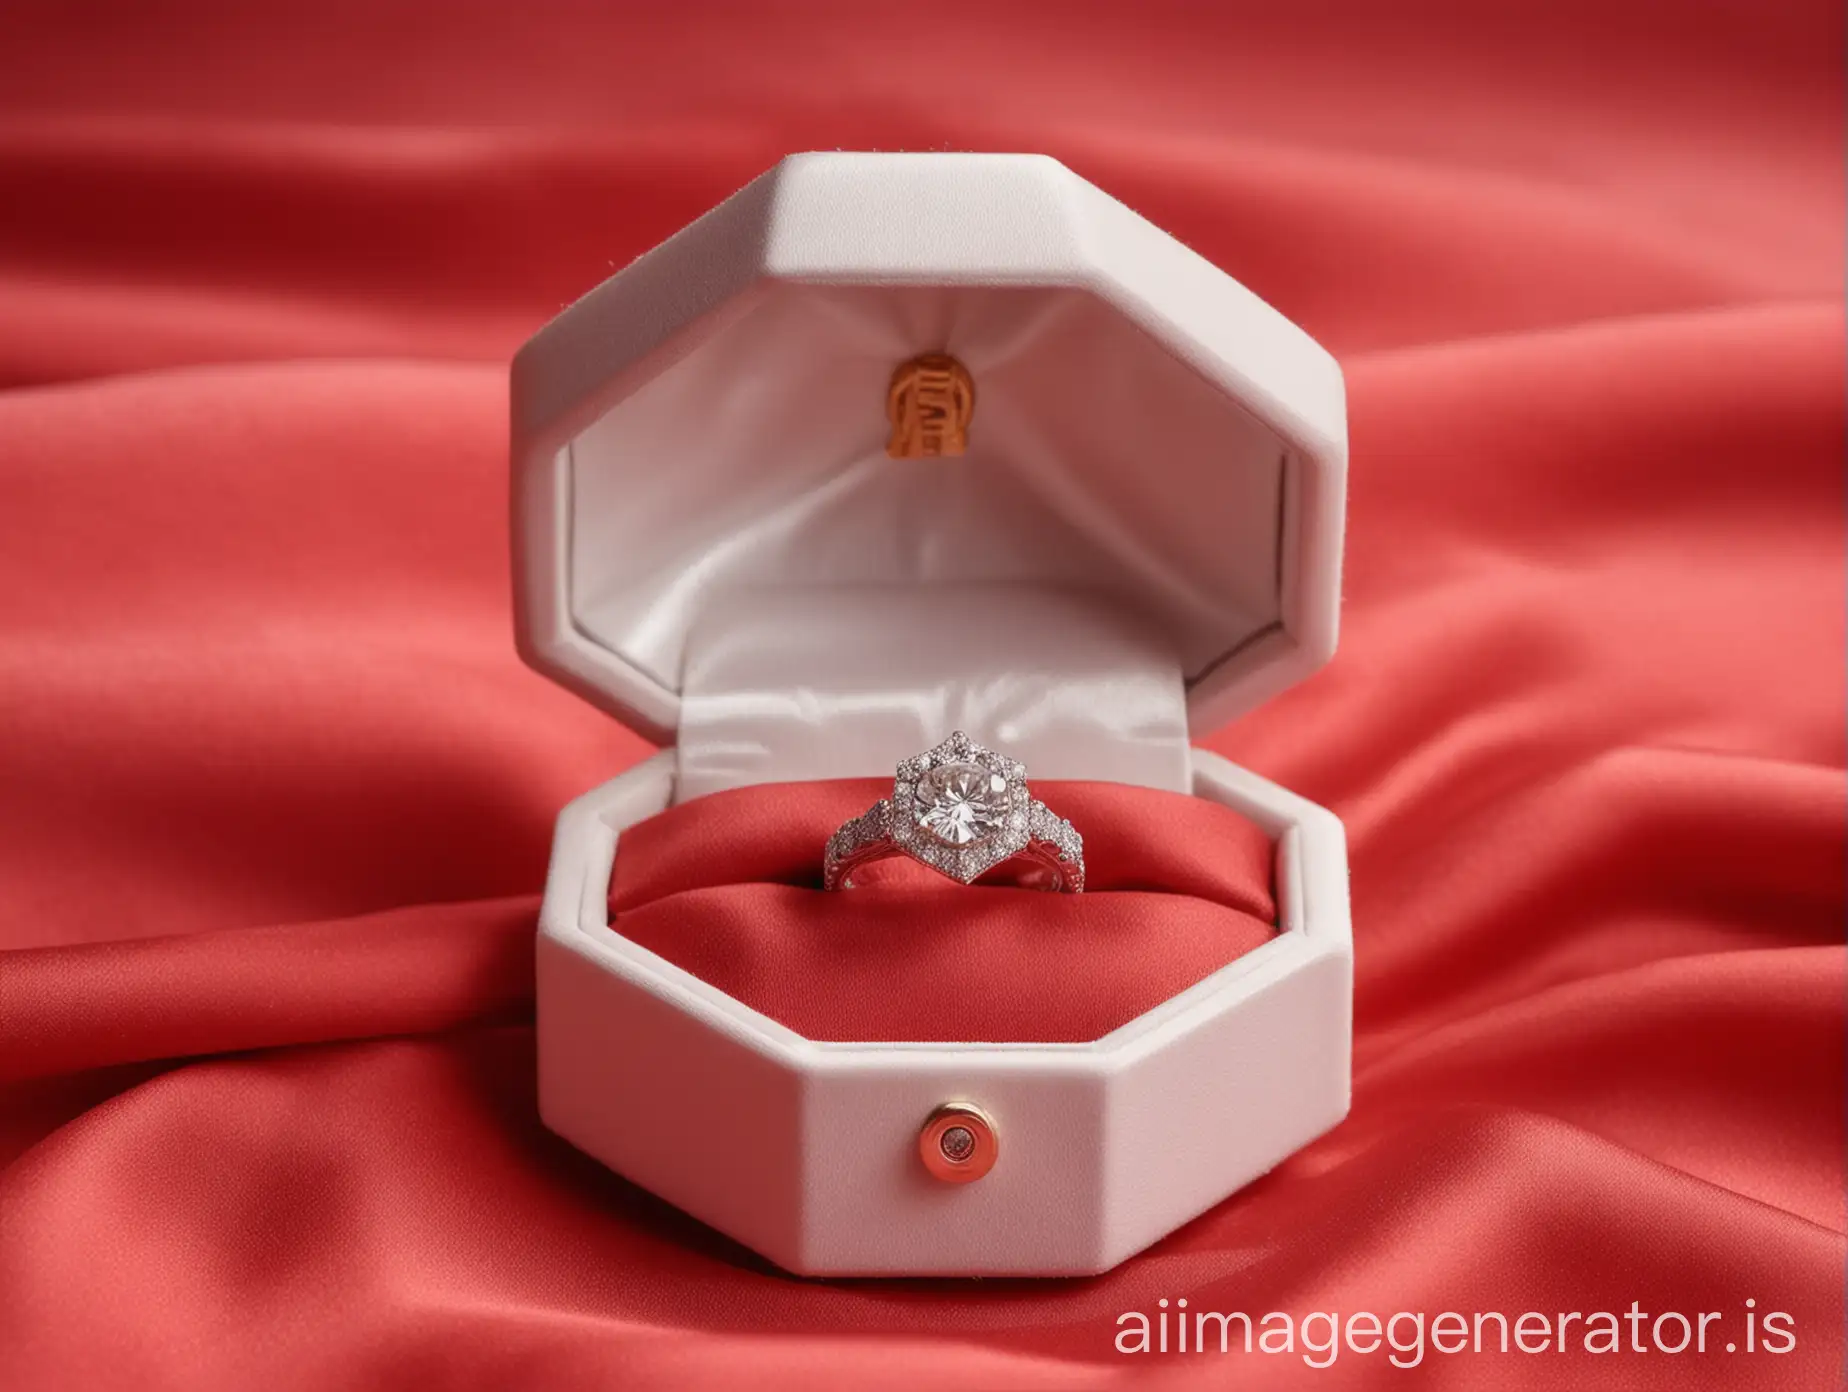 Elegant-White-Diamond-Ring-in-Red-Silky-Setting